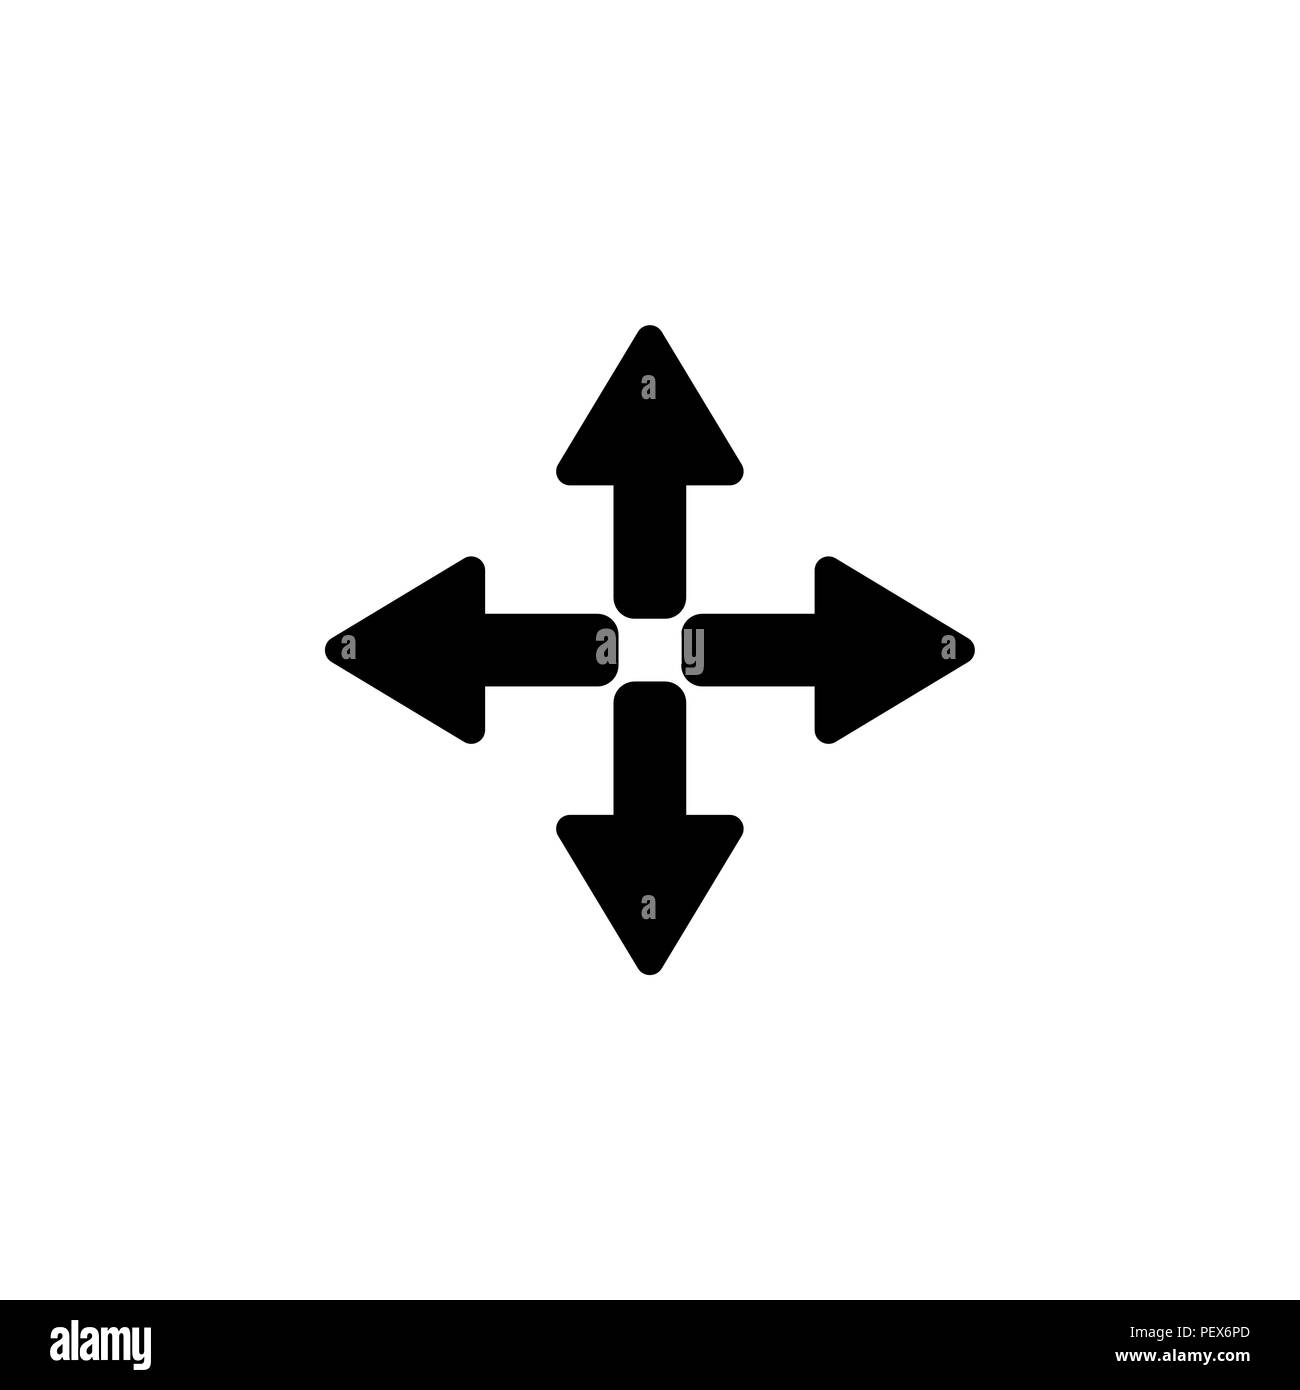 symbol arrows vector black on white background Stock Vector